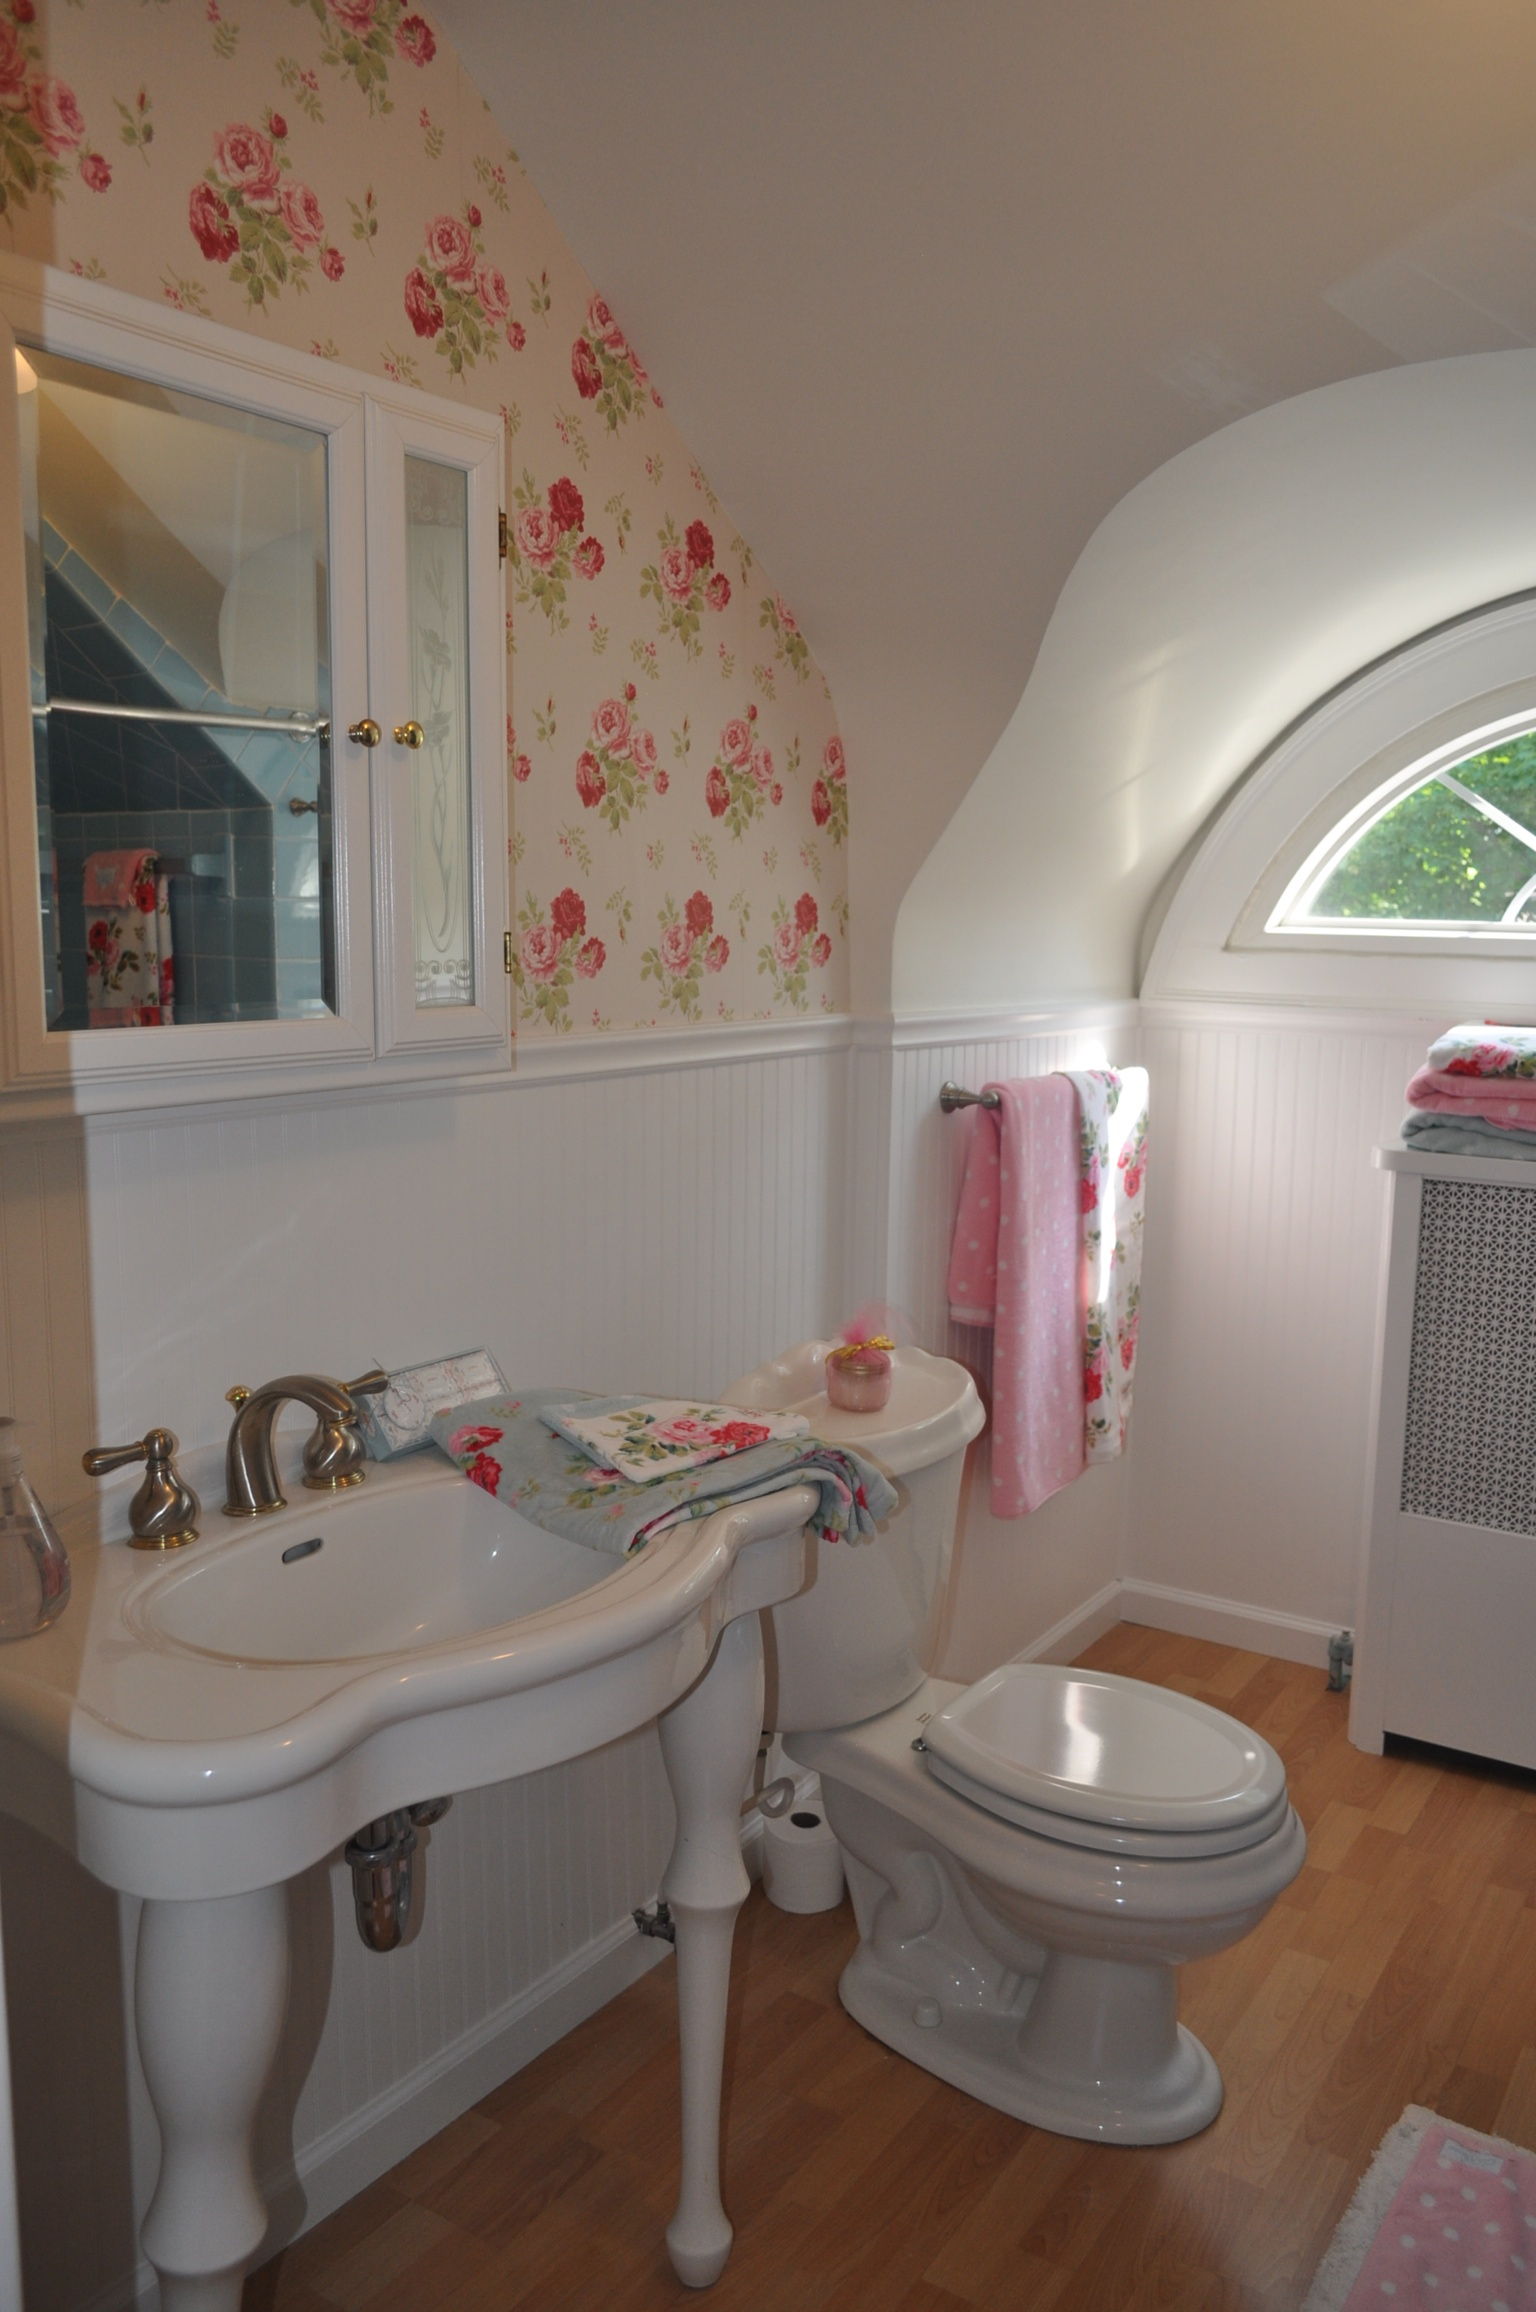 20 Perfect Vintage Look Bathroom Tile Samples - Interior Design ...